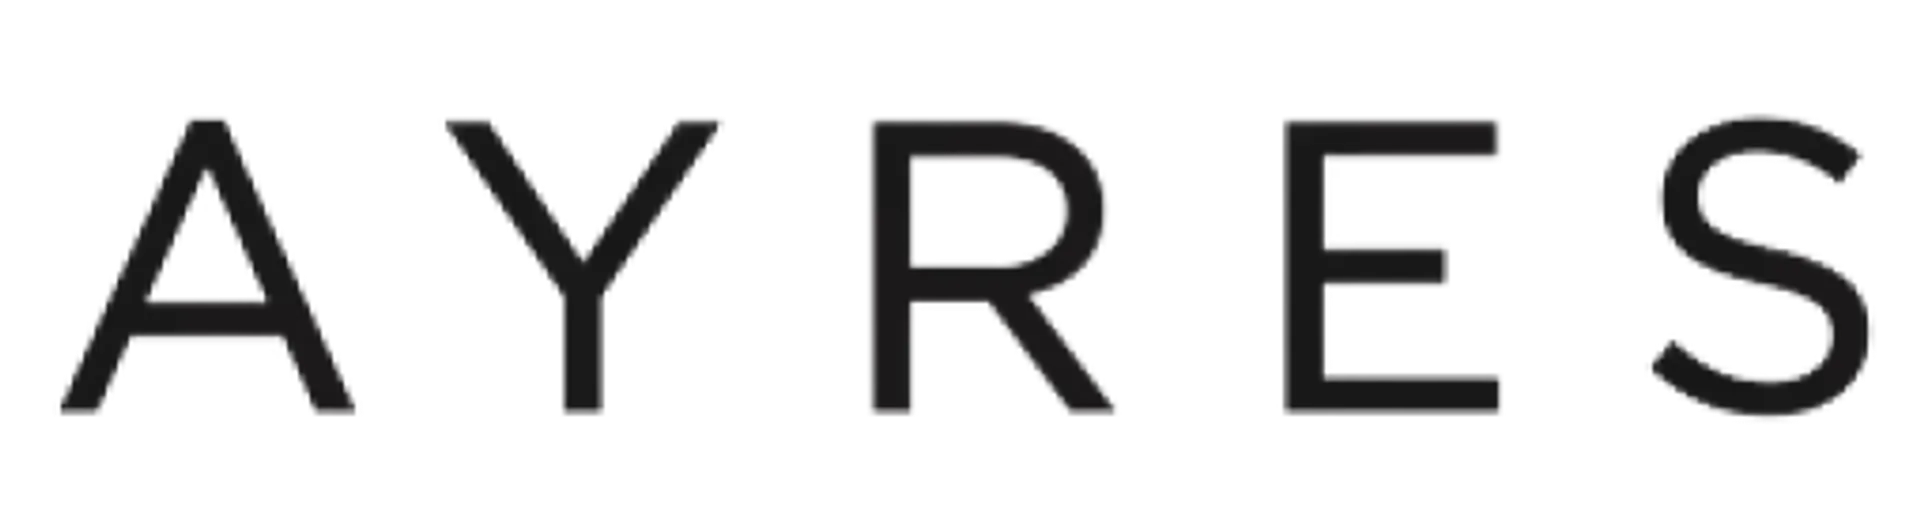 AYRES logo de catálogo